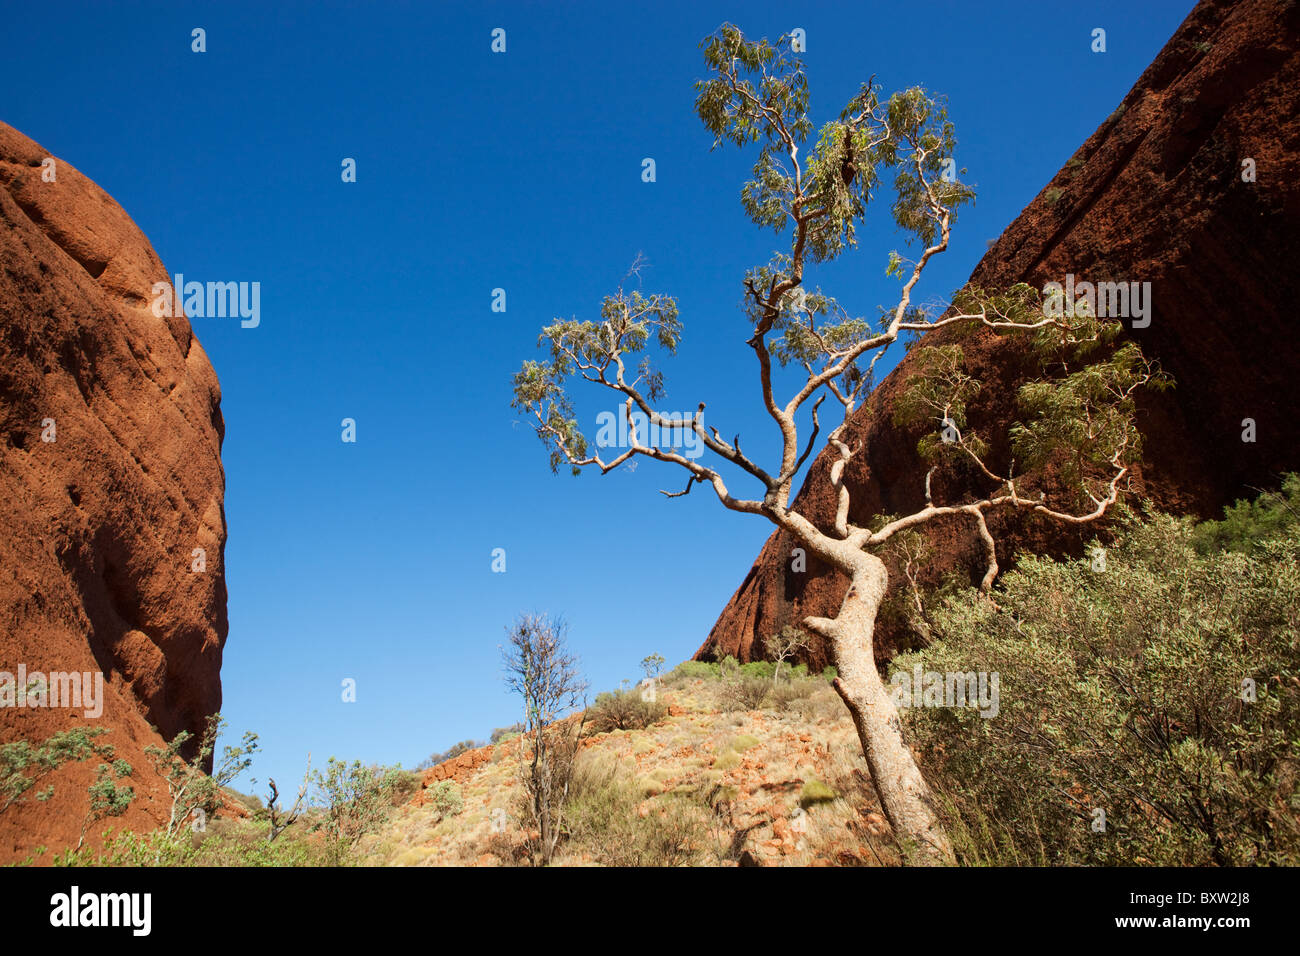 Australien, Northern Territory, Uluru - Kata Tjuta National Park, Wüste Eiche Baum im Canyon des Mount Olga Felsformation Stockfoto